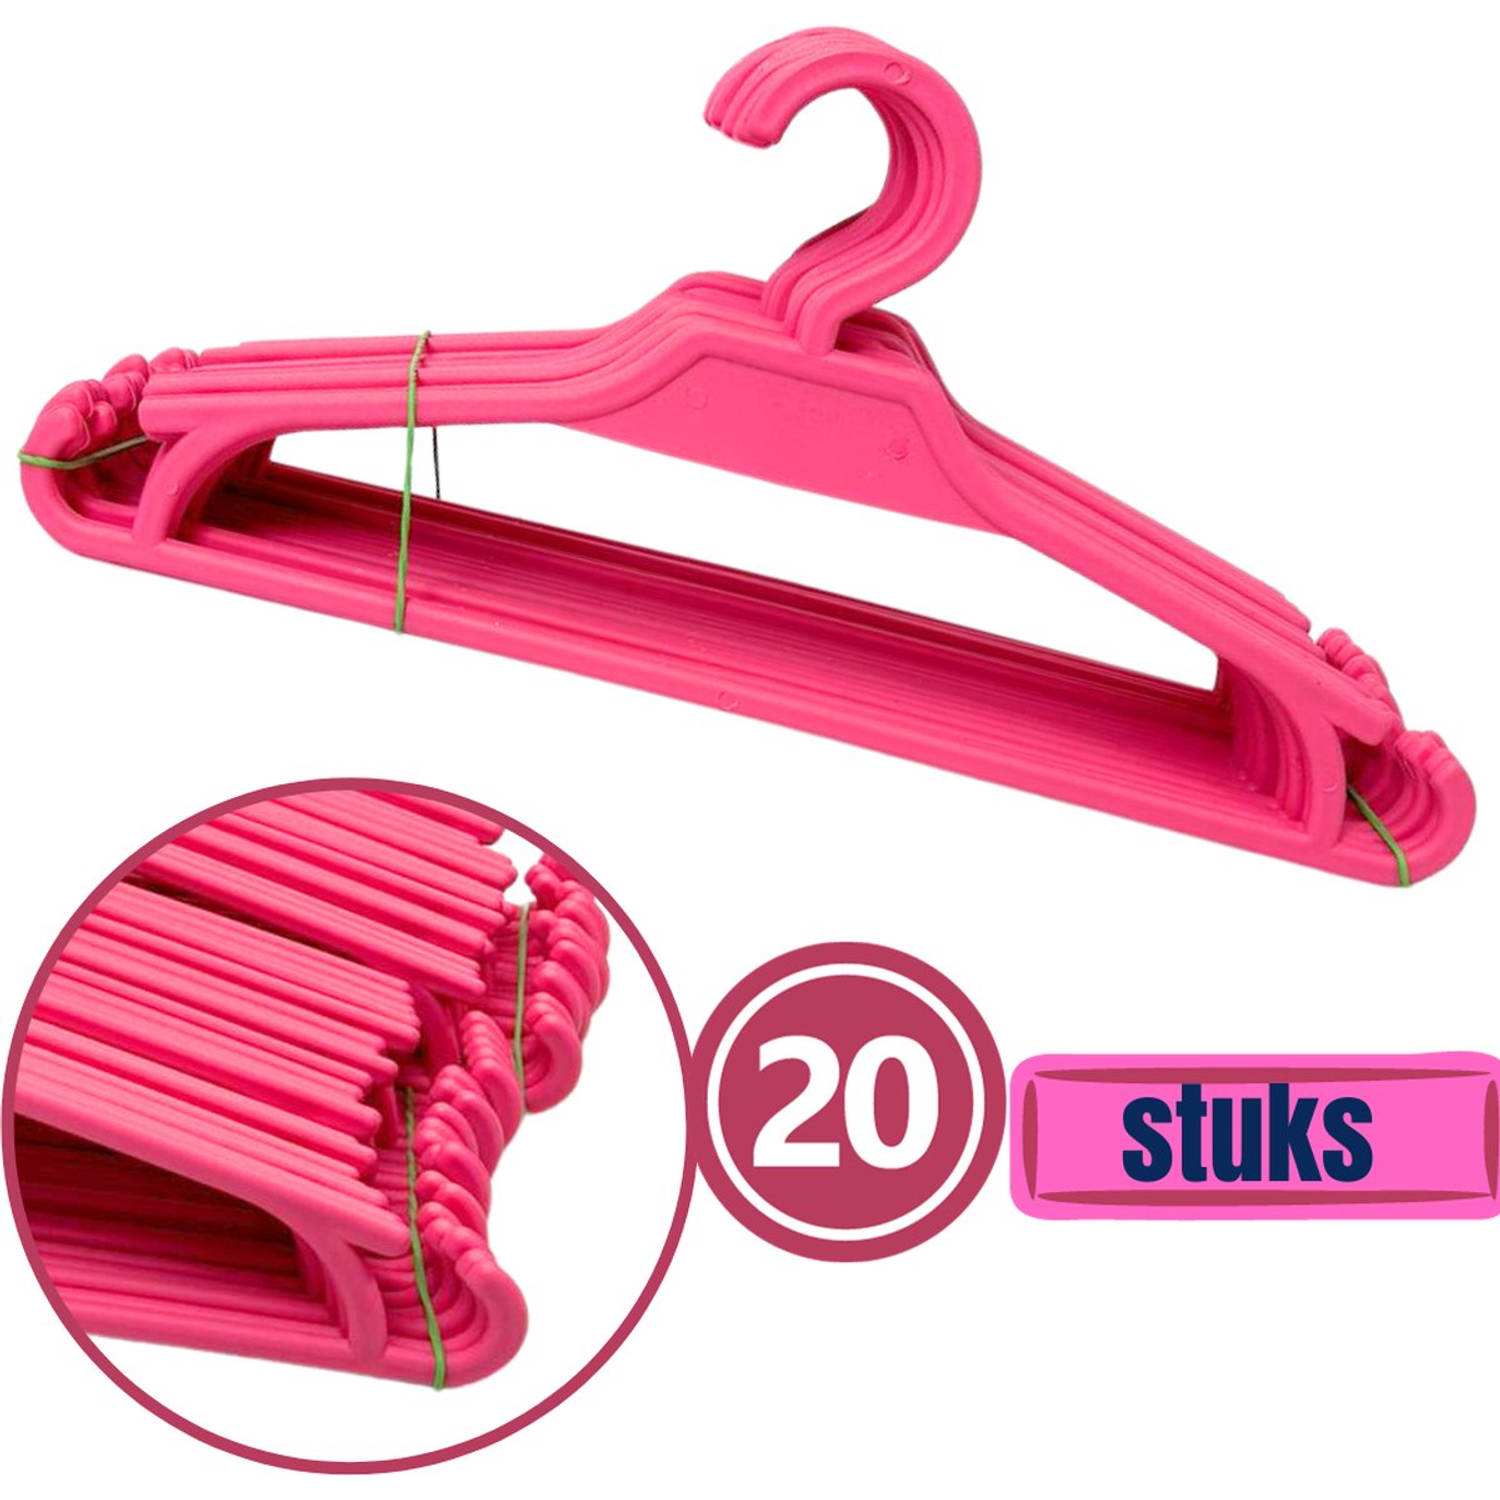 Synx Tools Kinder Kledinghangers Kleerhangers 20 stuks Hanger roze kleurenMix kledinghangers baby ki